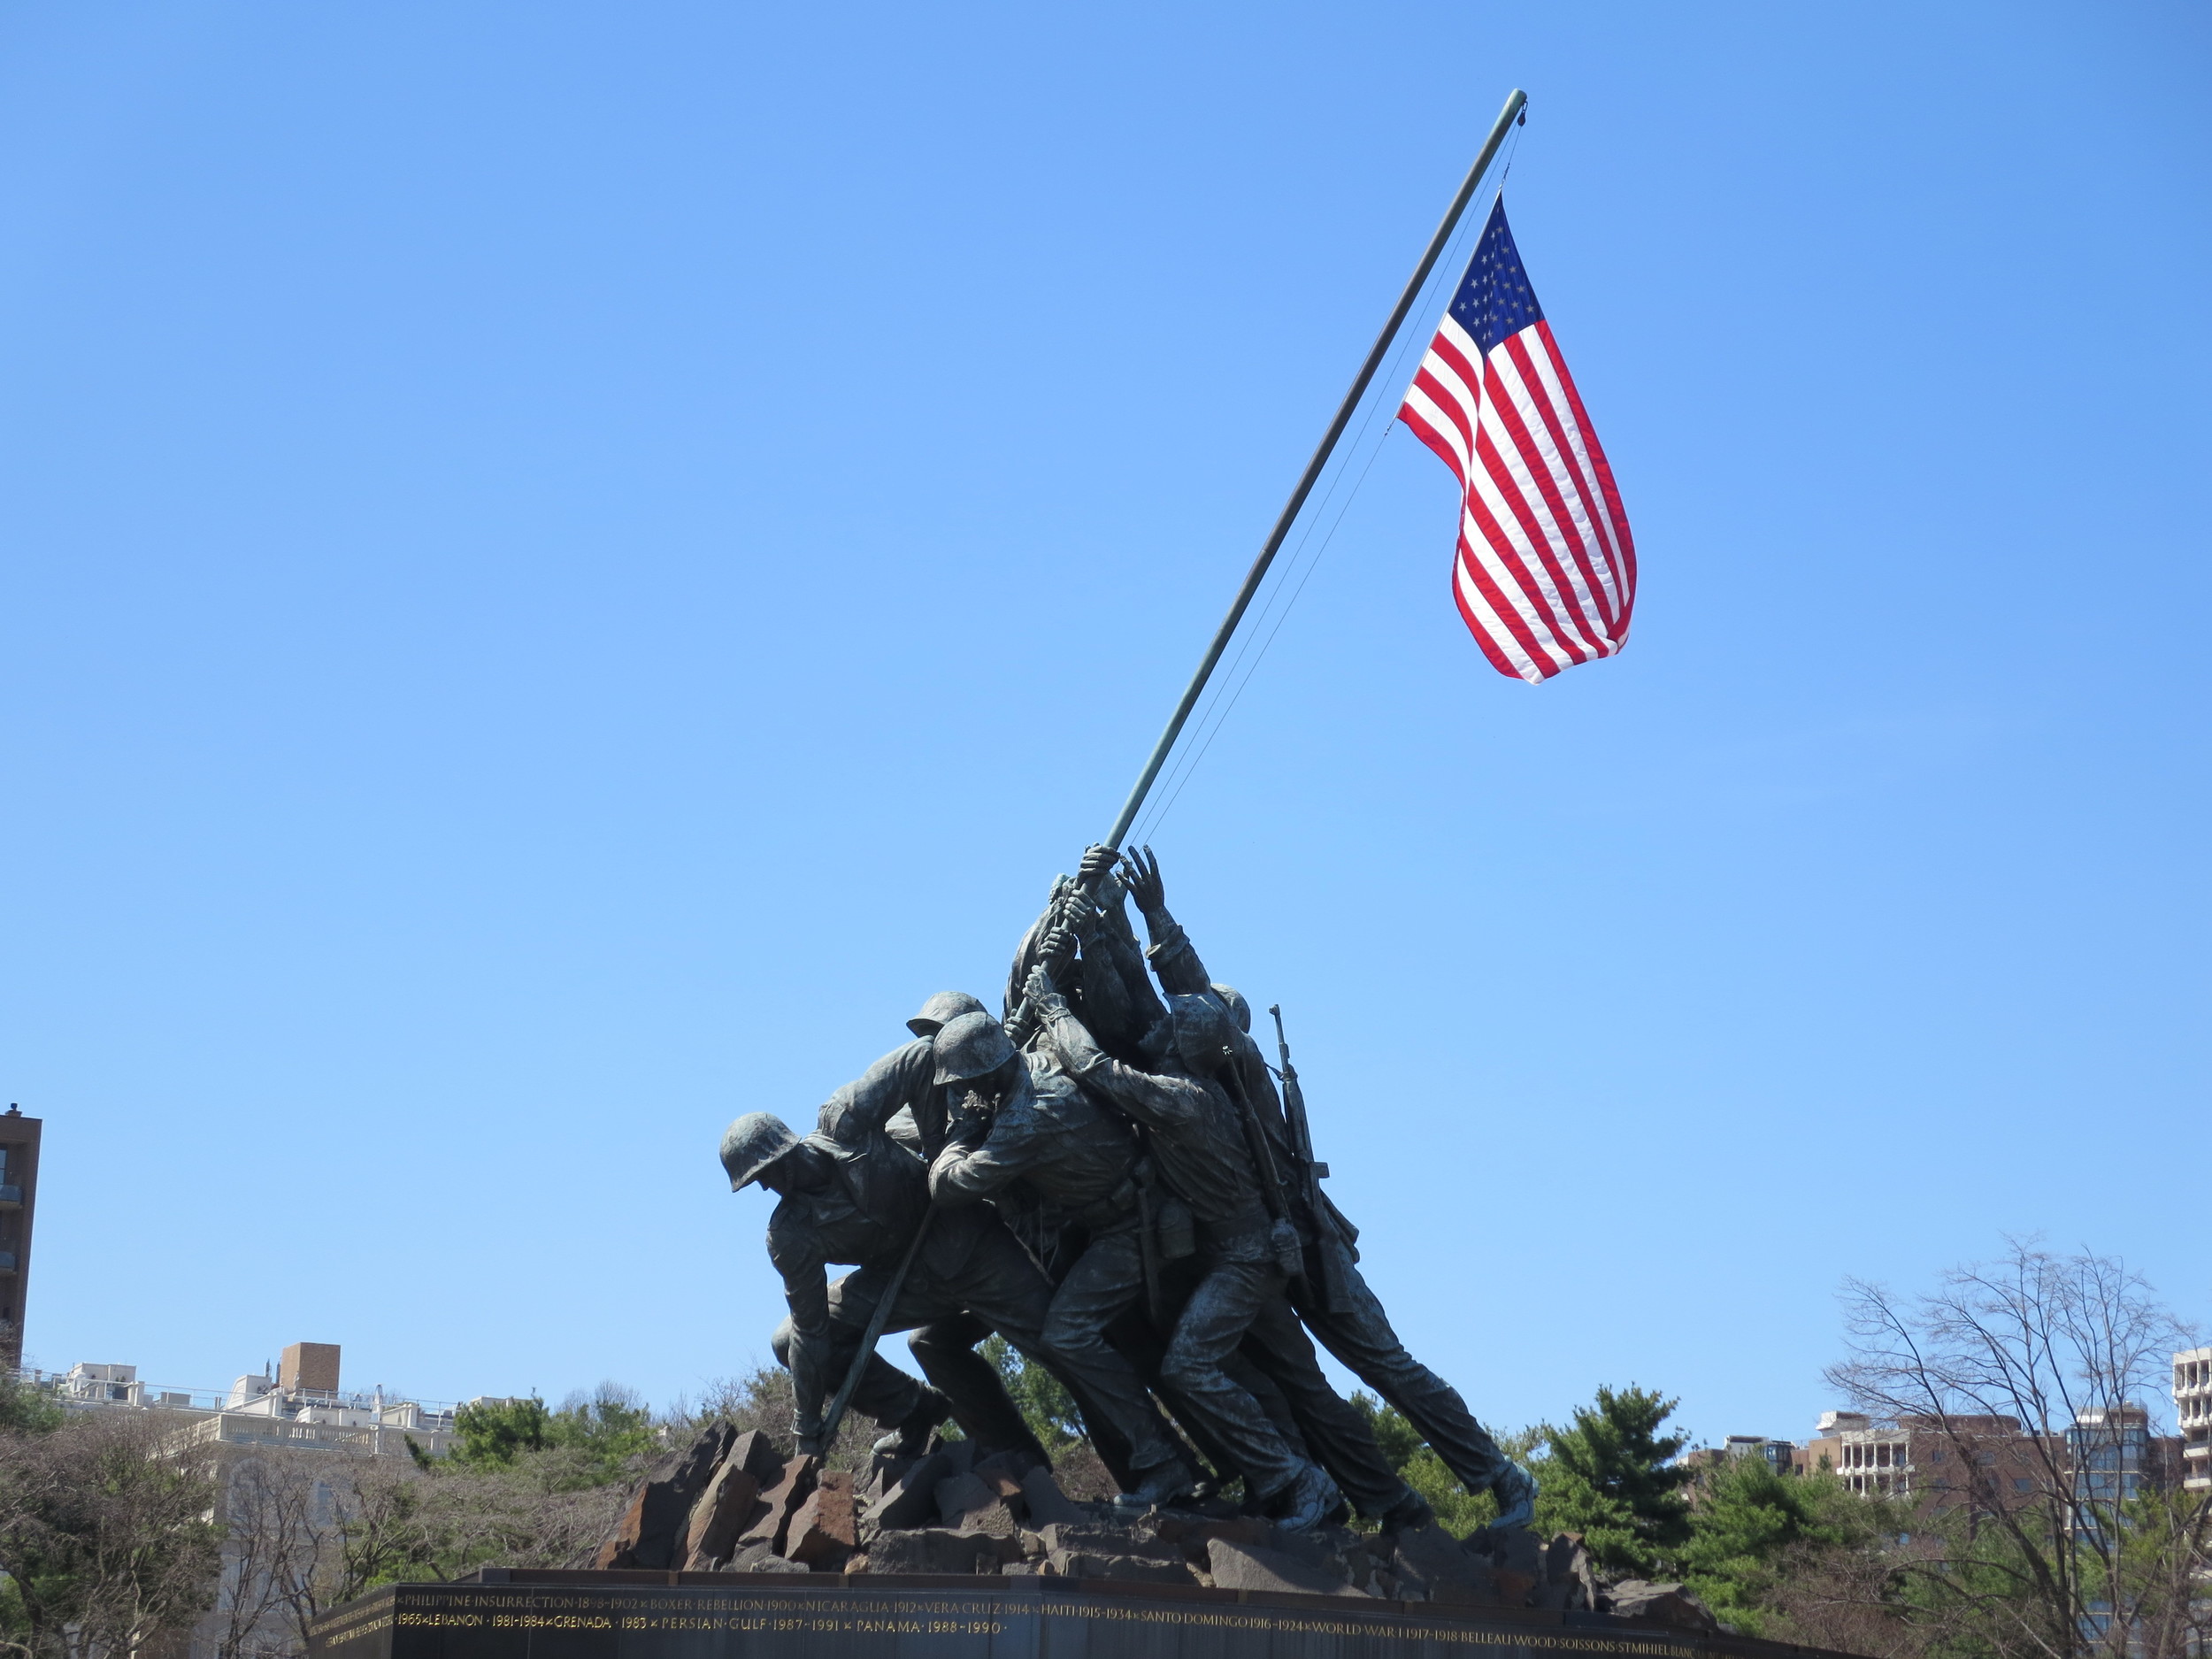 Iwo Jima Memorial - much bigger than we had imagined